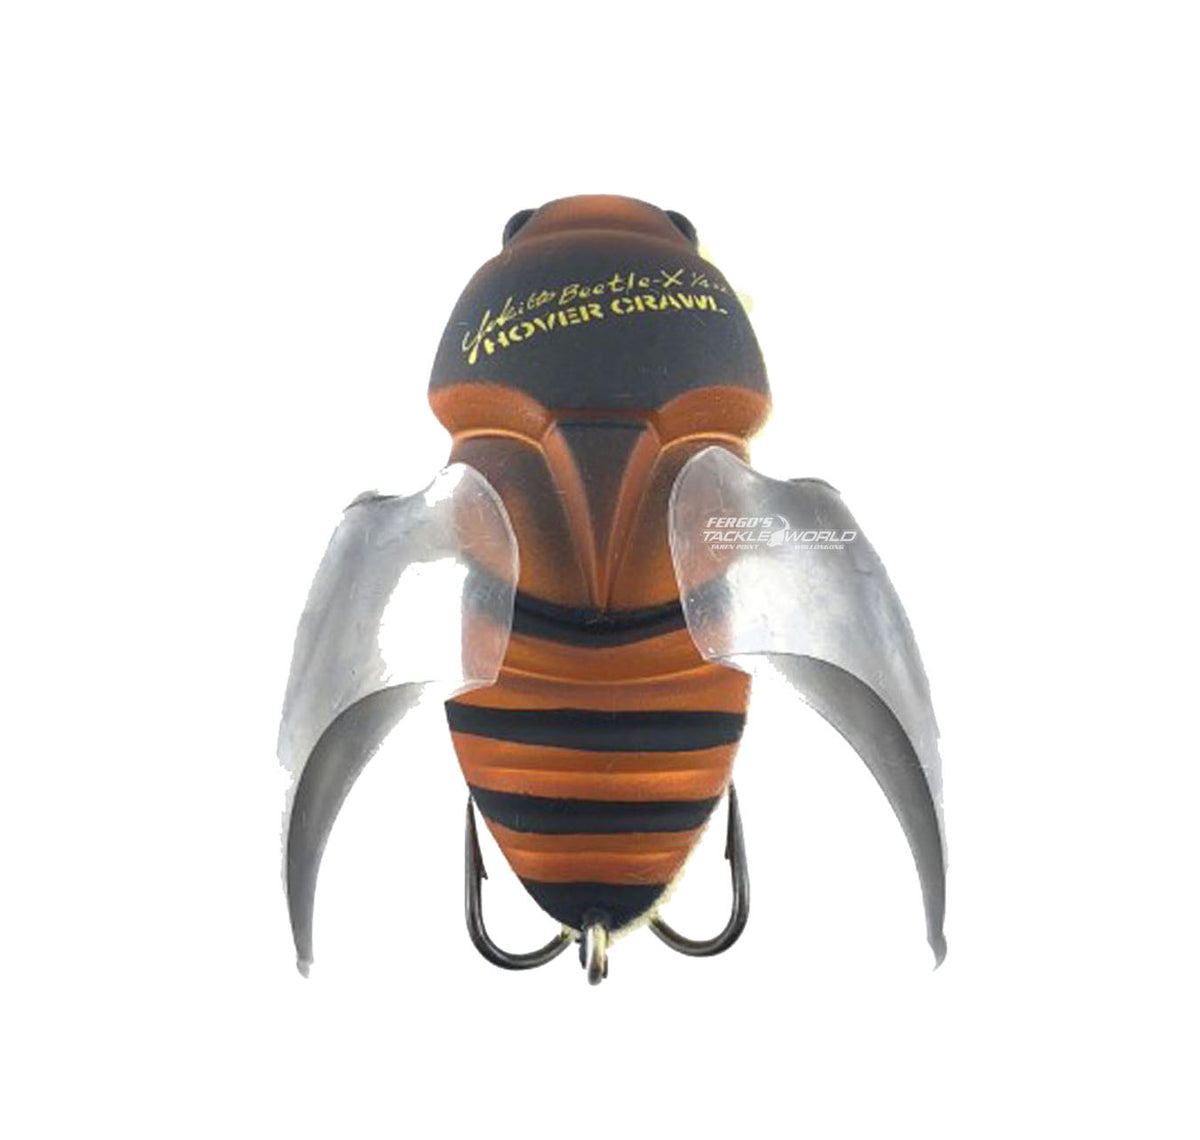 Megabass Beetle-X Hover Crawl Lures